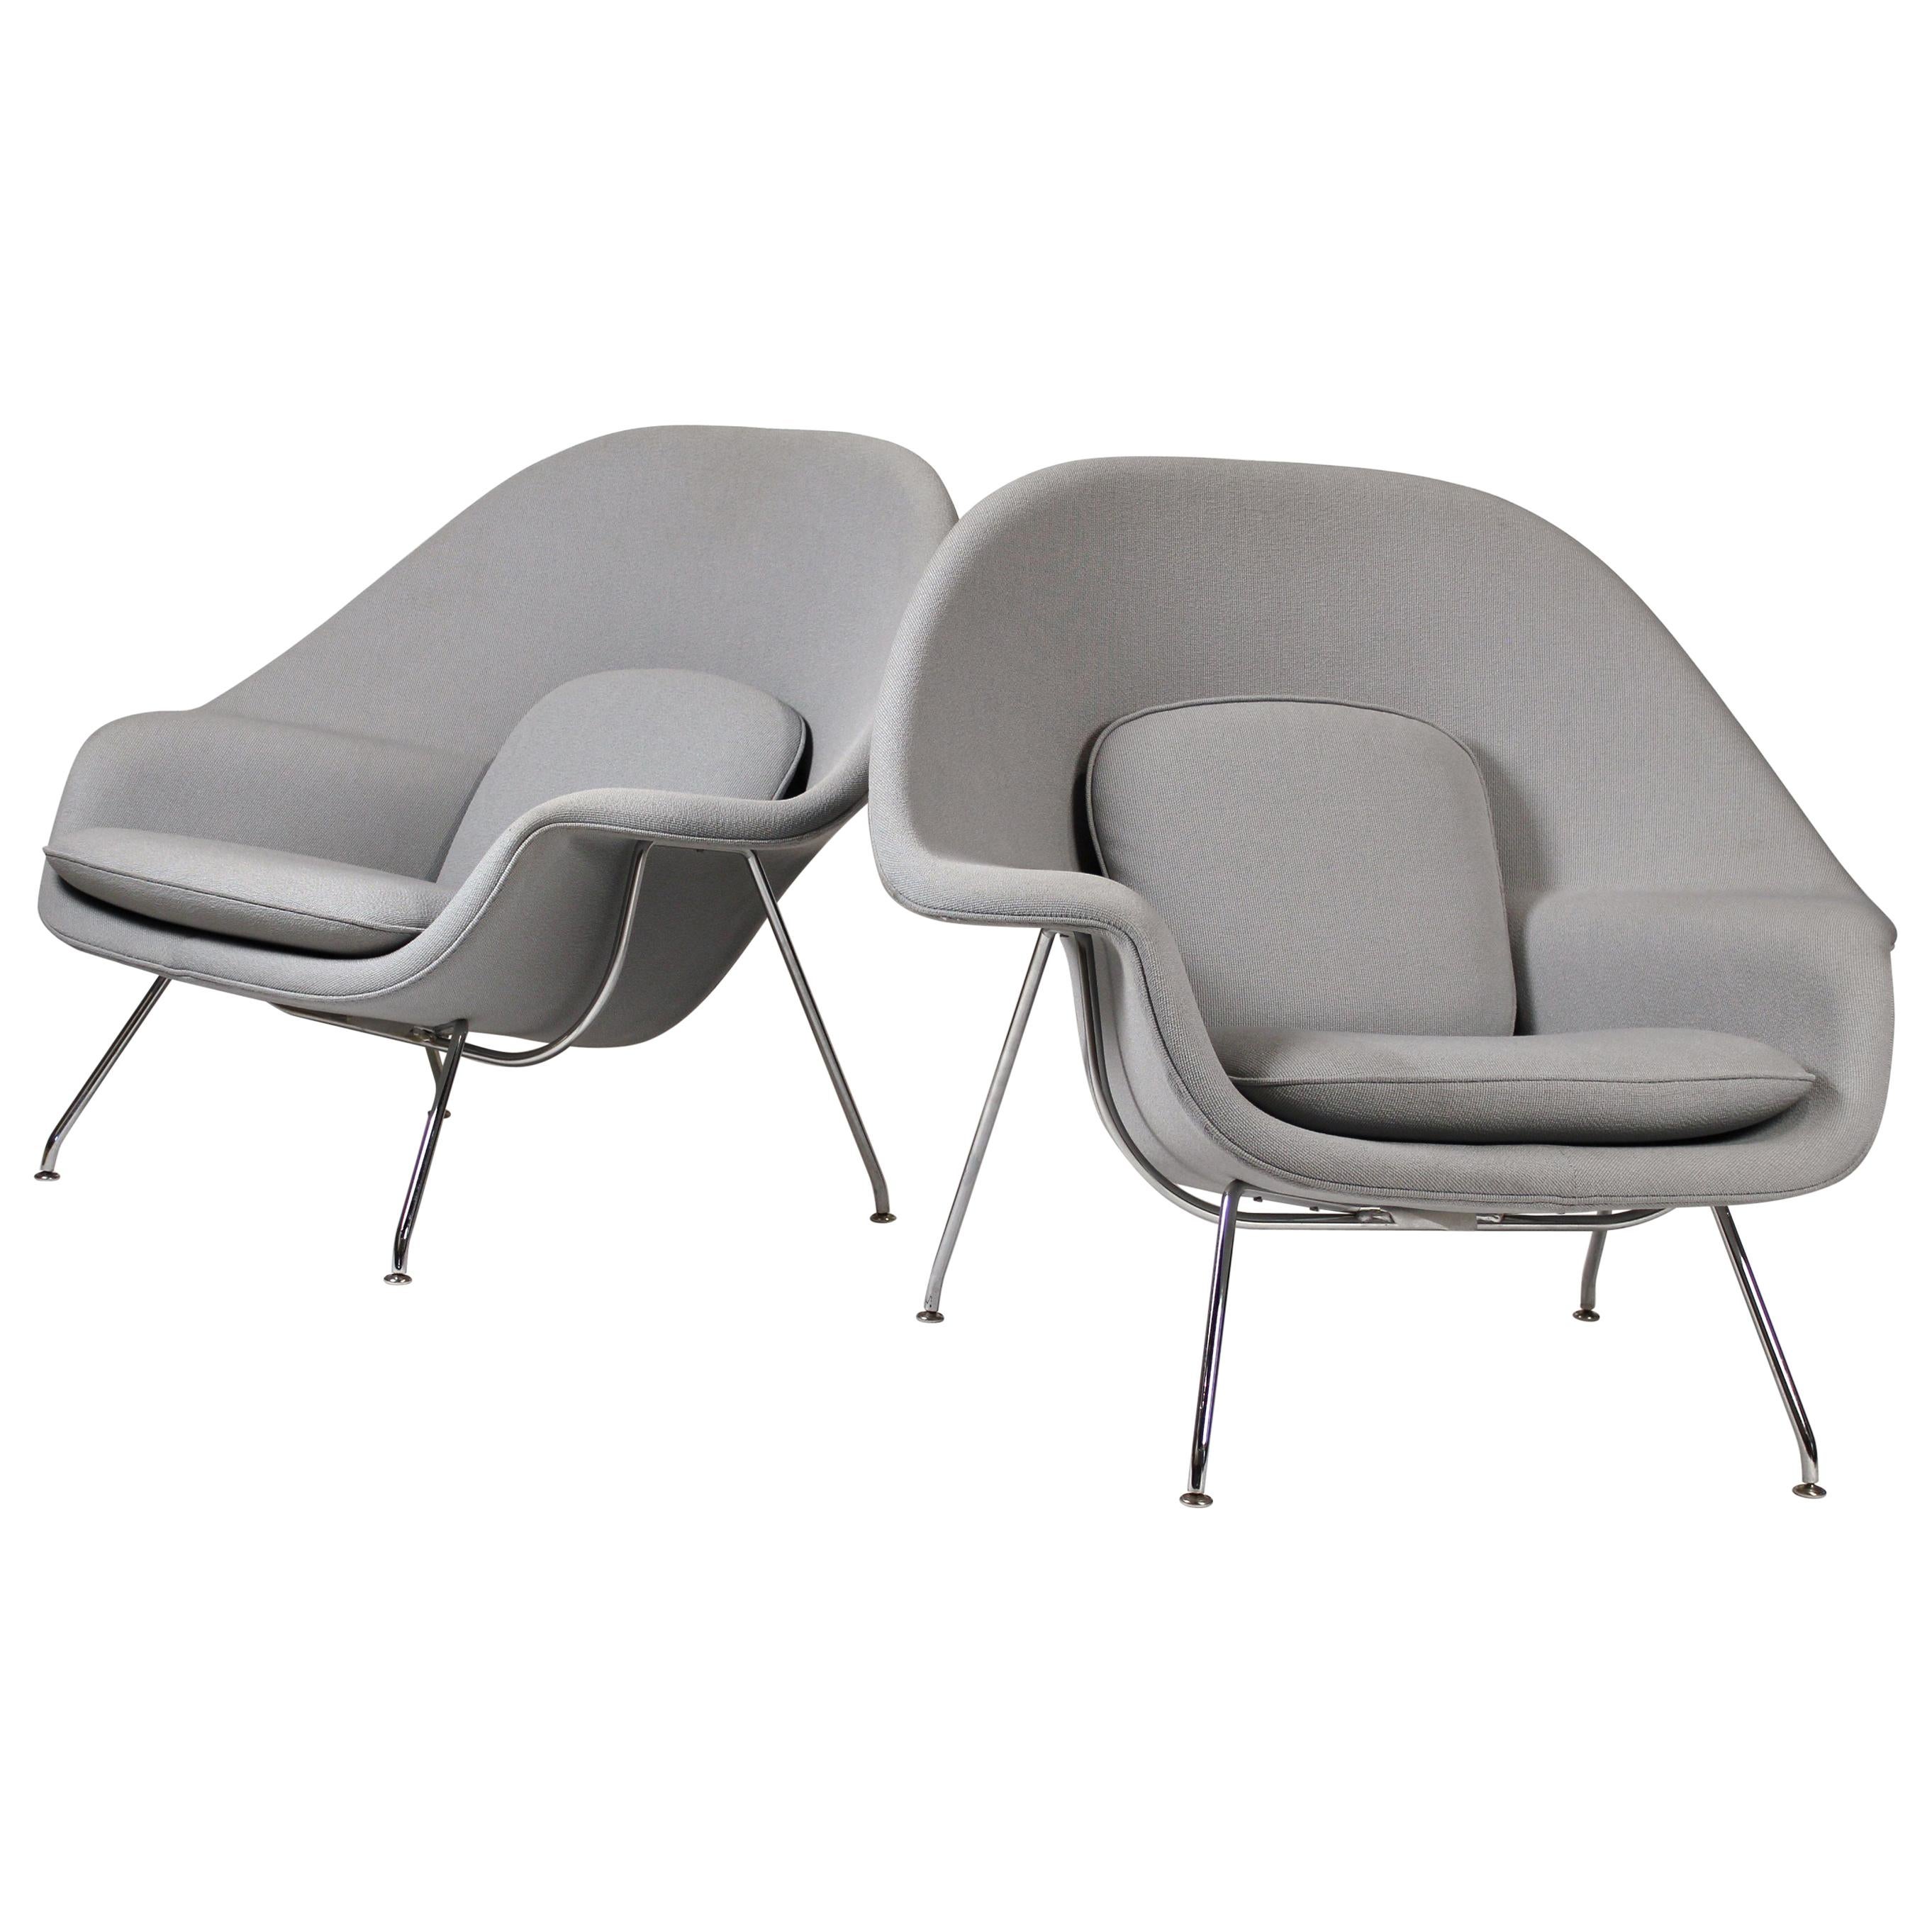 Pair of Knoll Womb Chairs Designed by Eero Saarinen